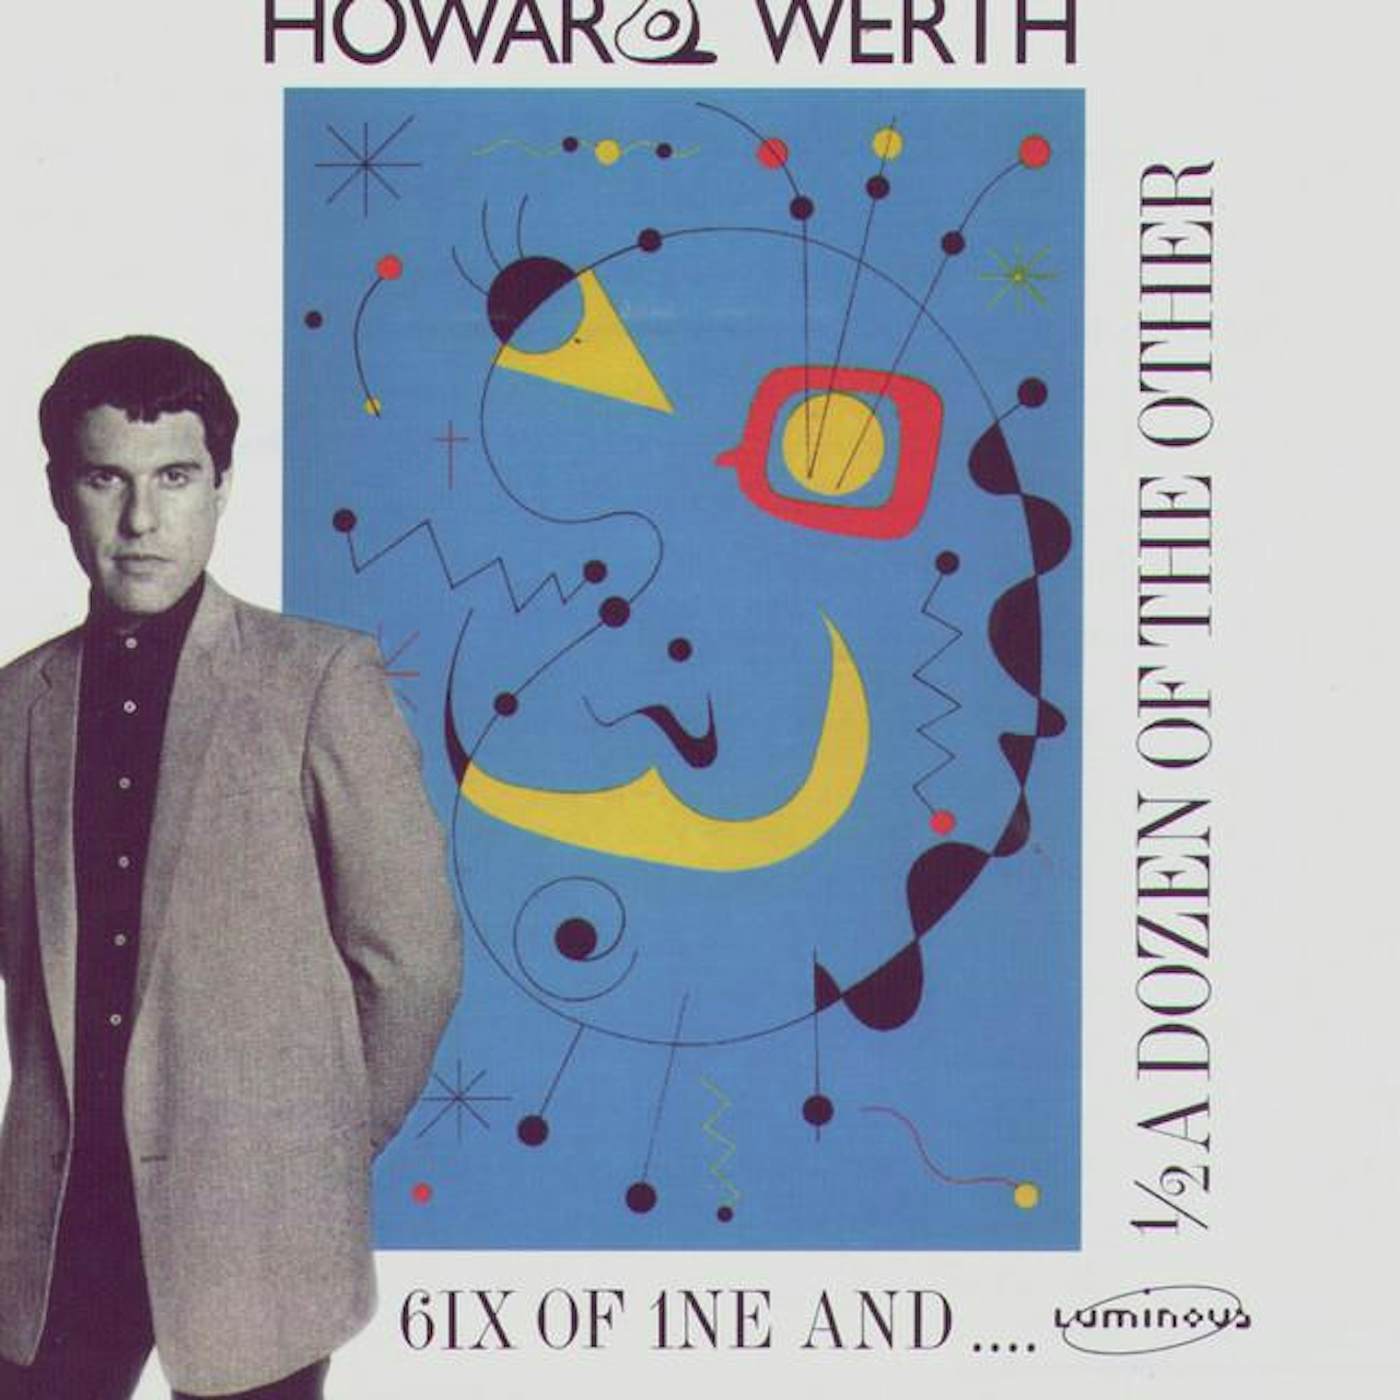 Howard Werth